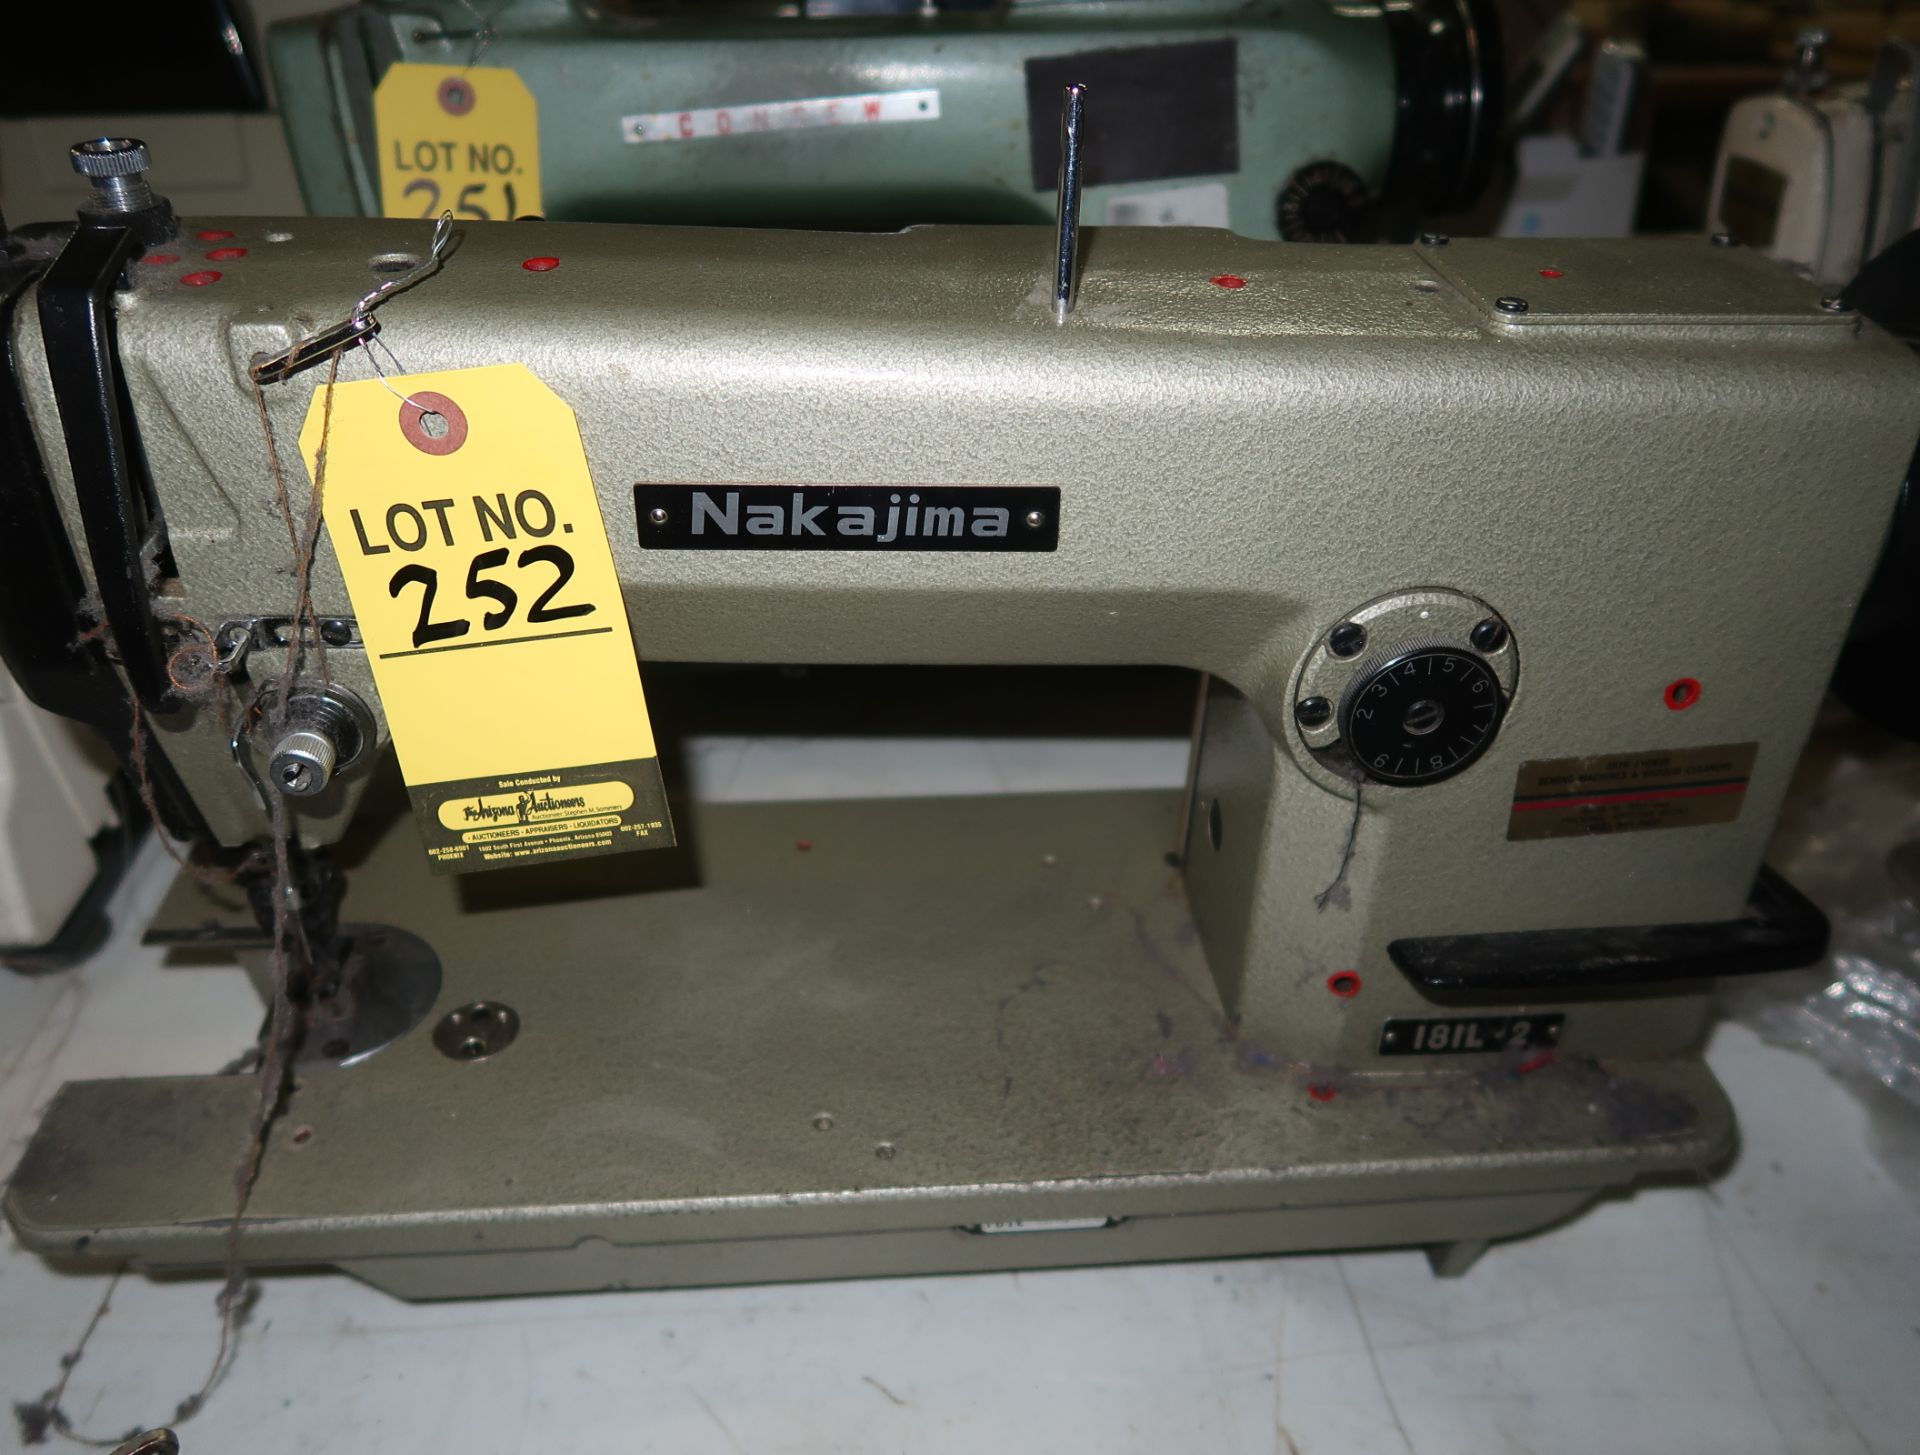 NAKAJIMA SEWING MACHINE MDL. 181L-2 - Image 2 of 3